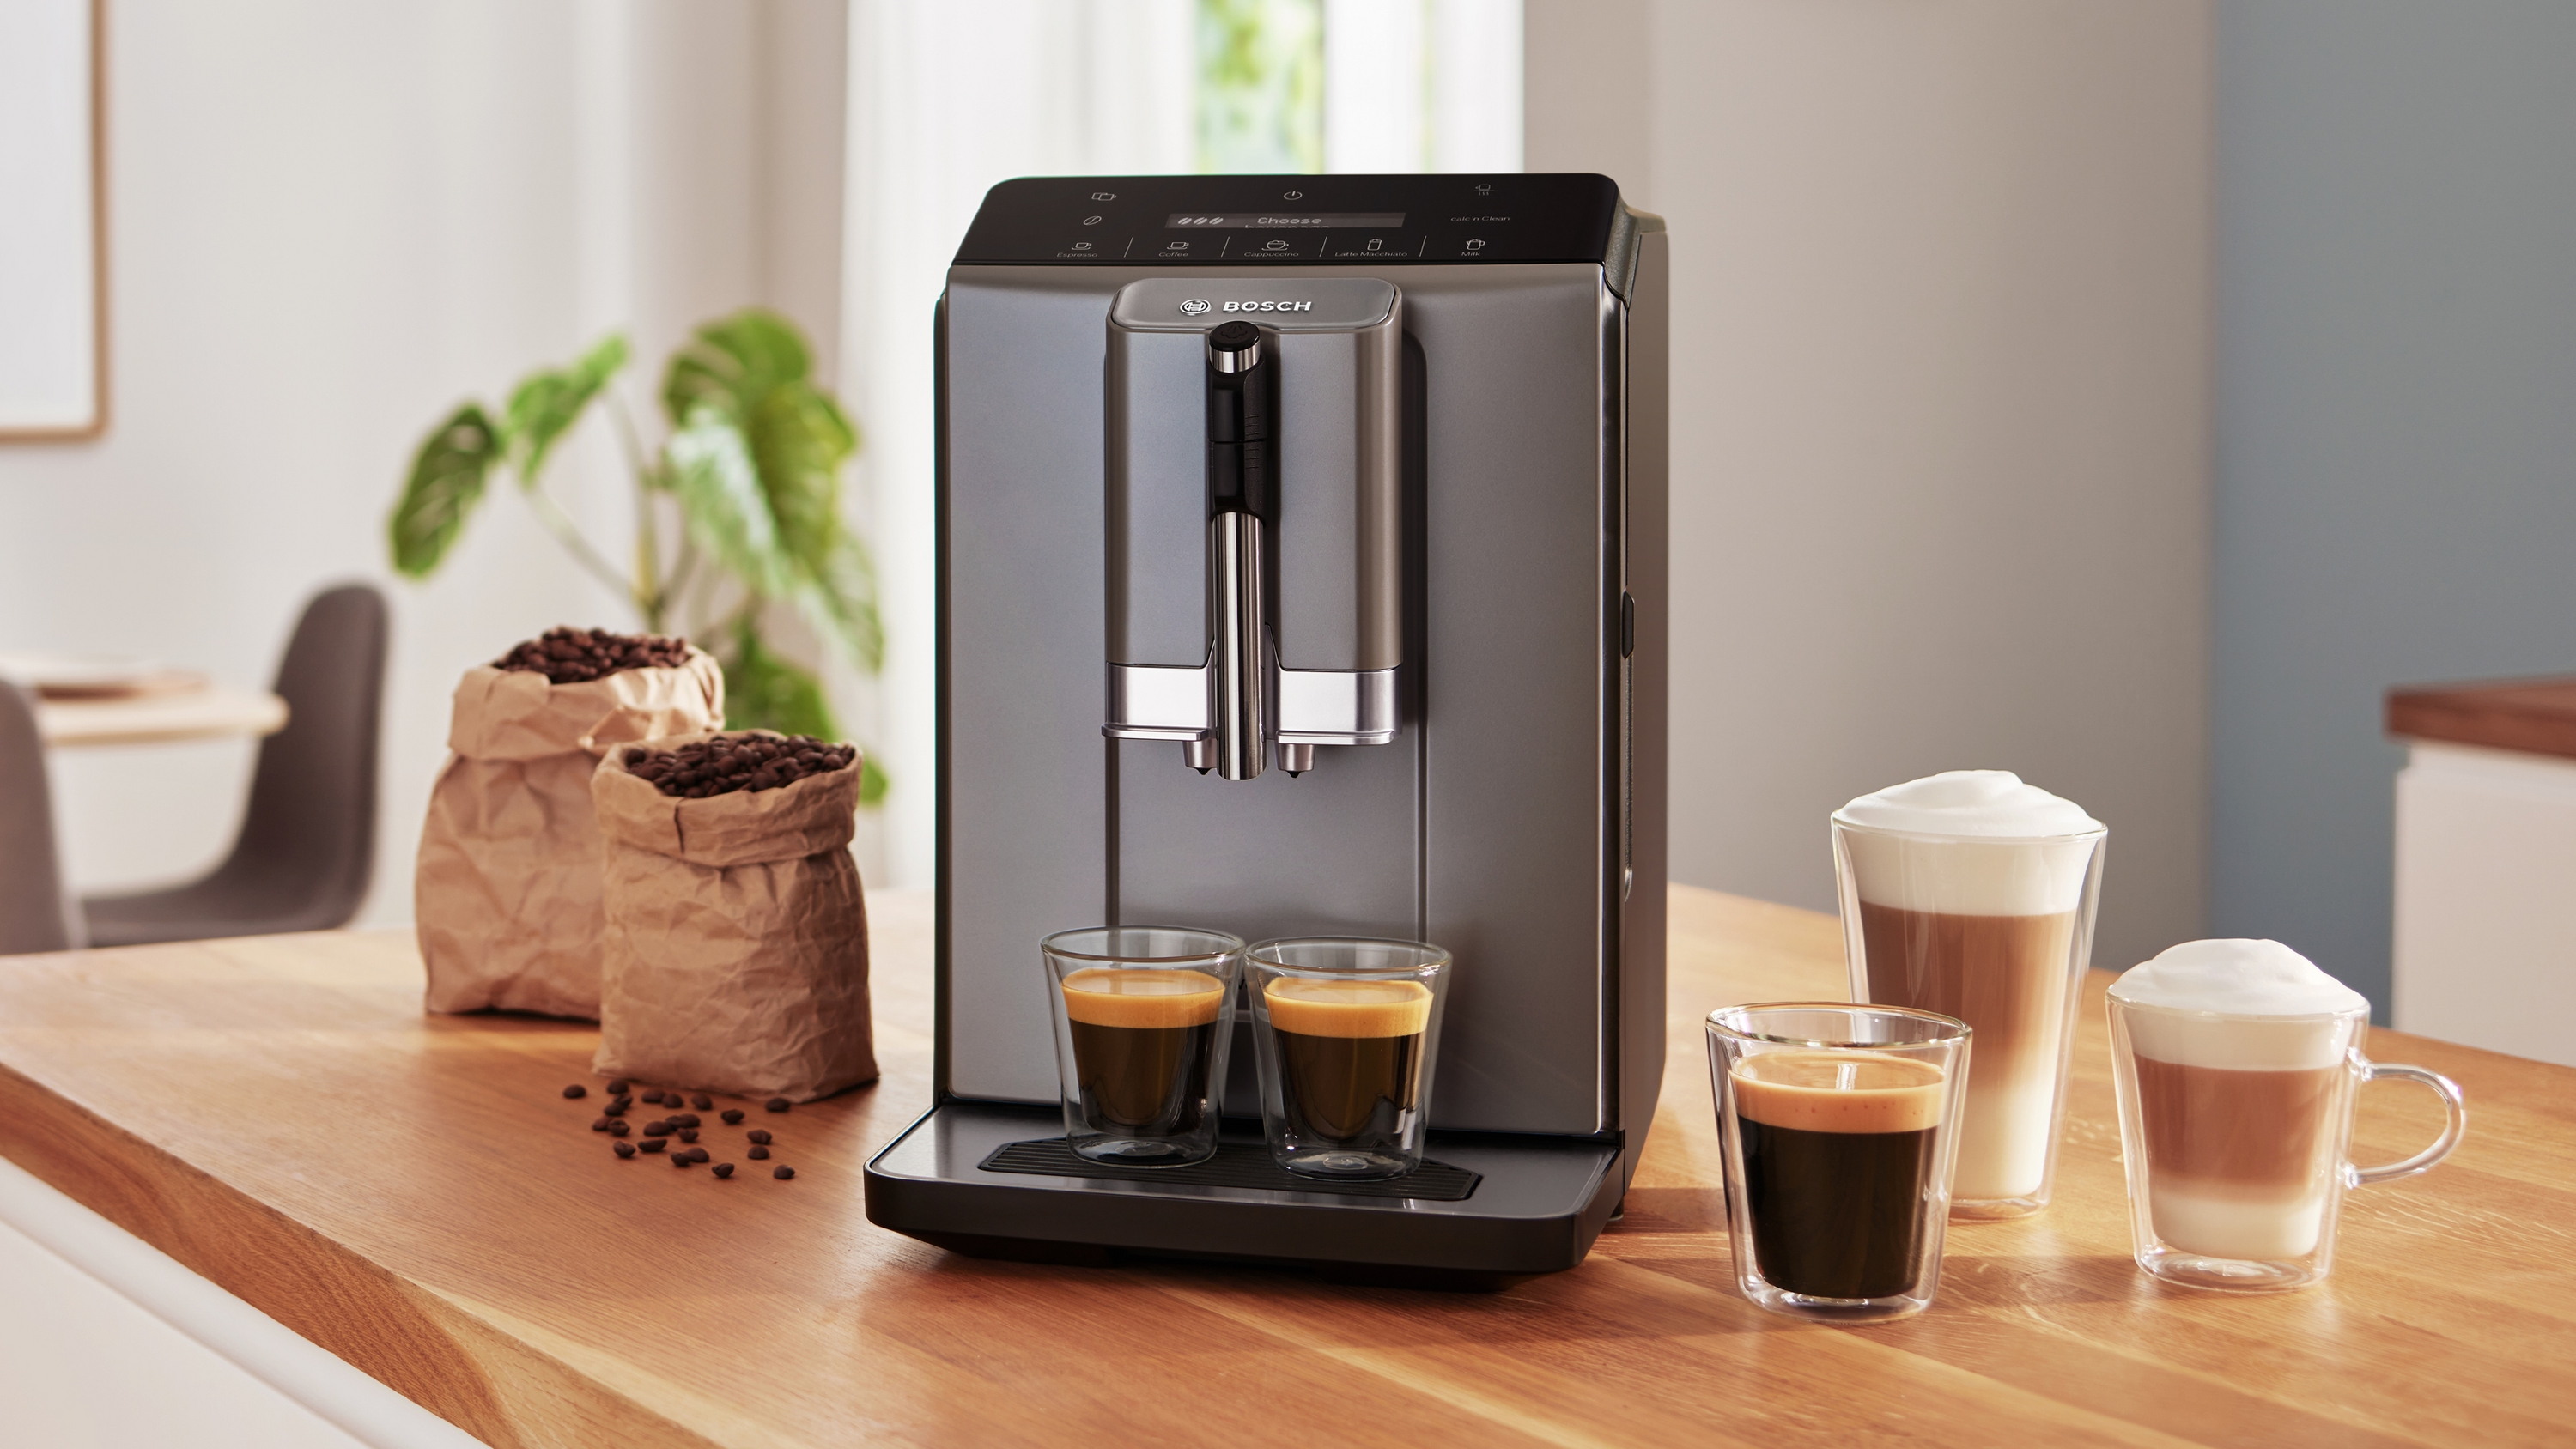 Fully automatic coffee machine, Serie 2 VeroCafe, Diamond titanium metallic, TIE20504